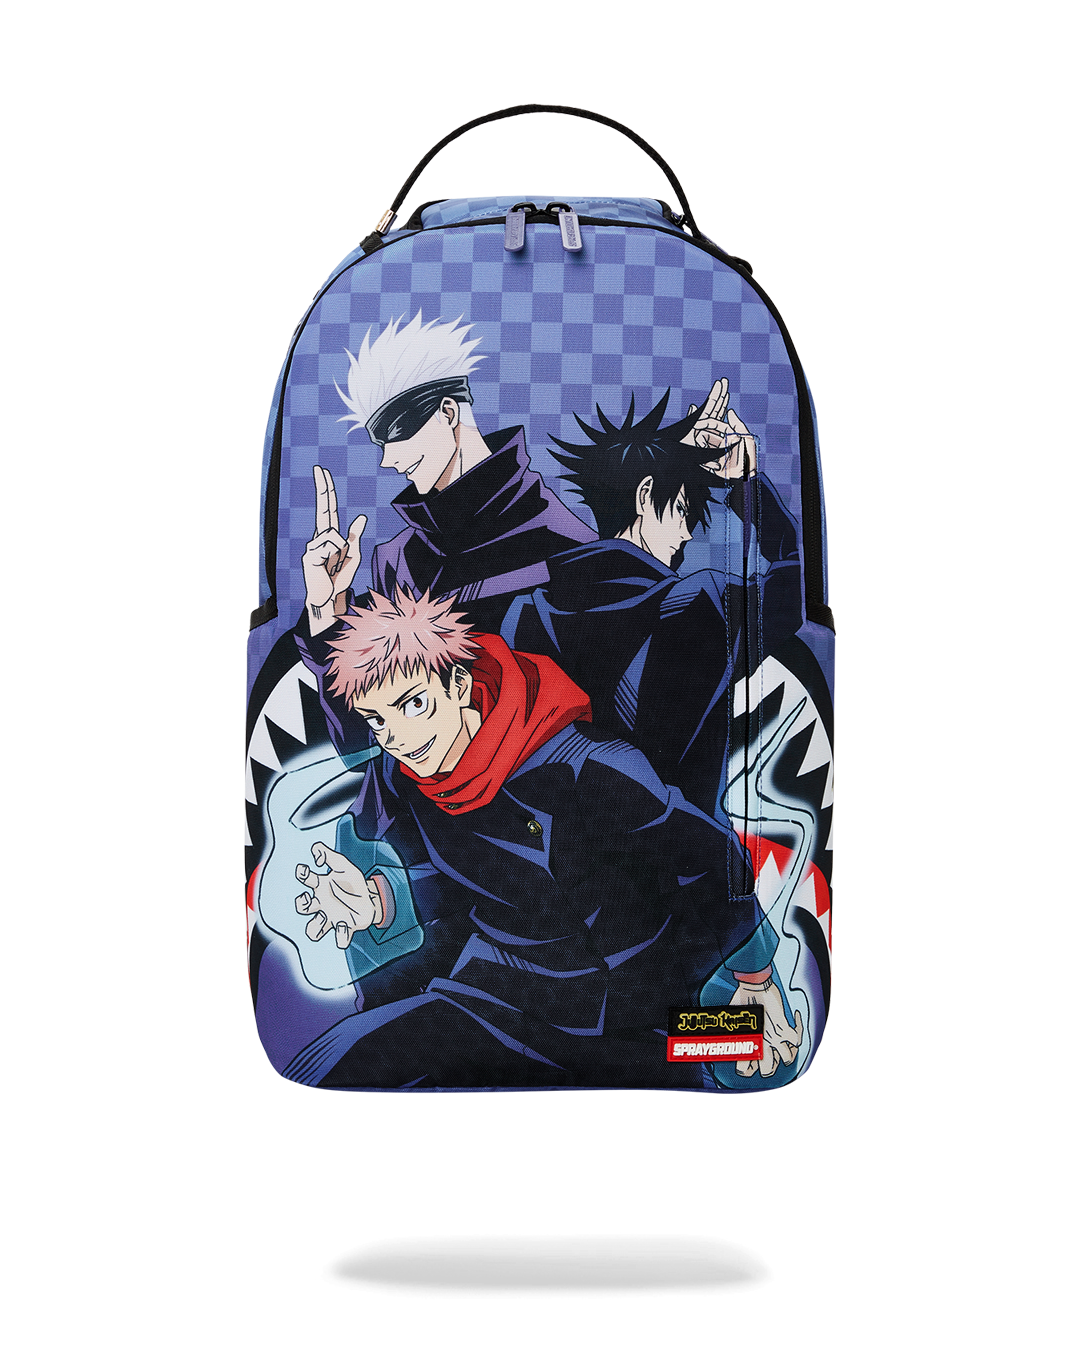 Sprayground Jujutsu Kaisen Ready Up School Backpack Limited Edition